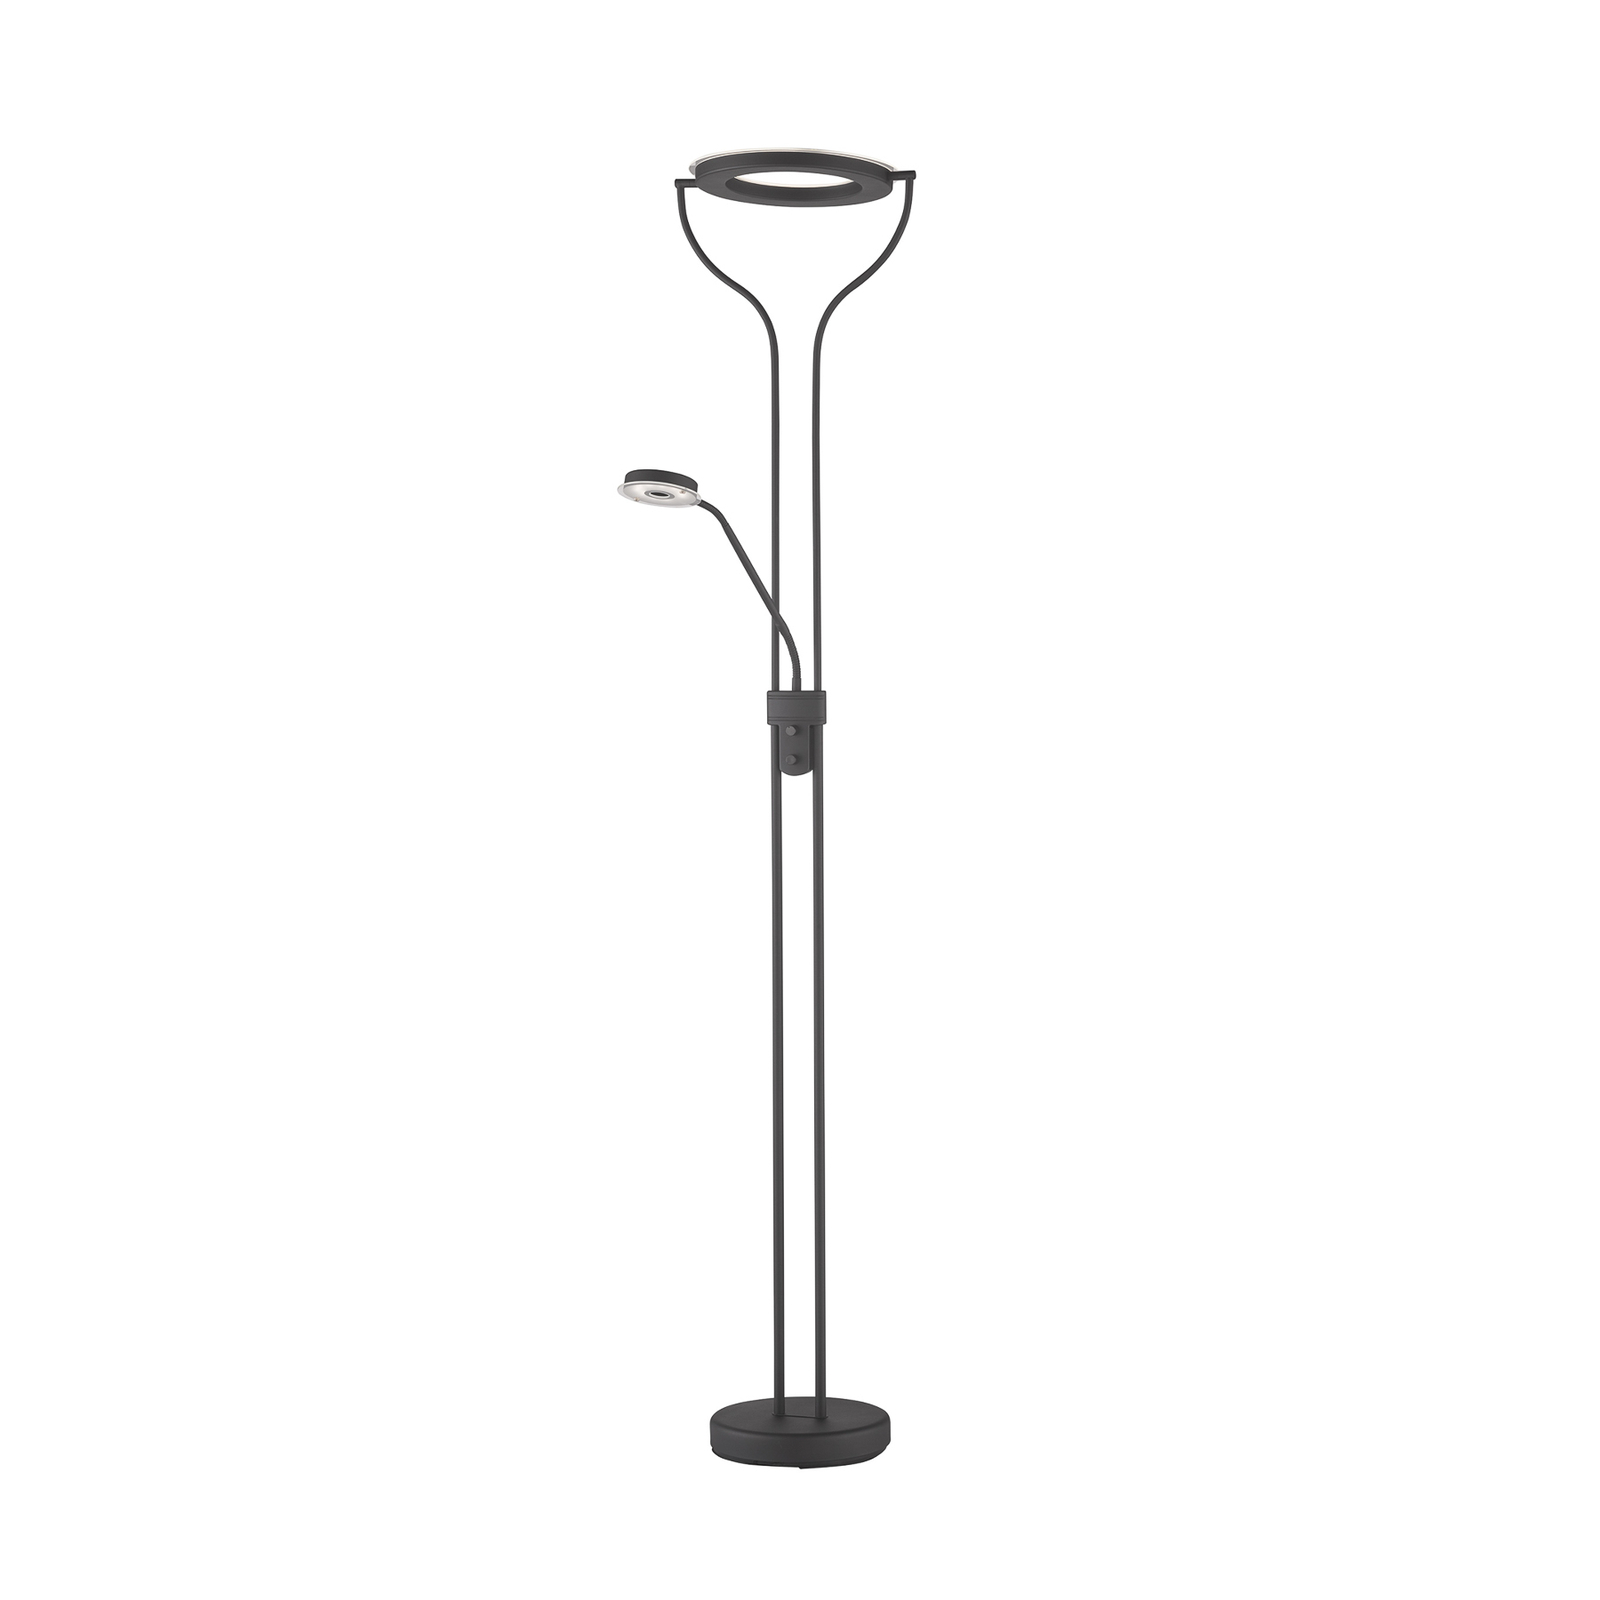 LED-Stehlampe Davos, schwarz, Höhe 180 cm, 2-flg., CCT